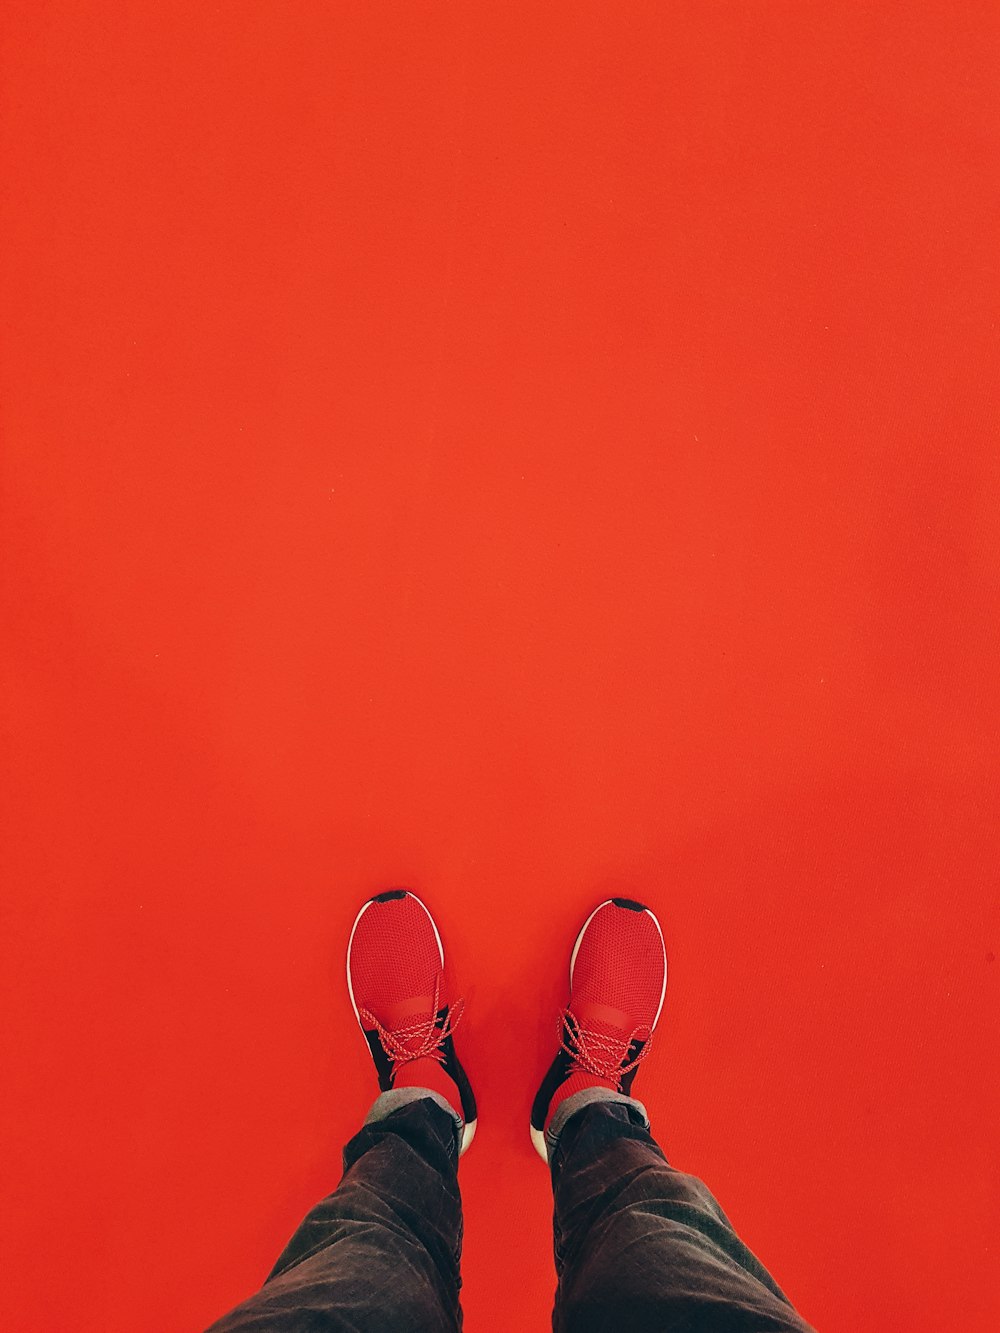 Persona con zapatilla roja para correr